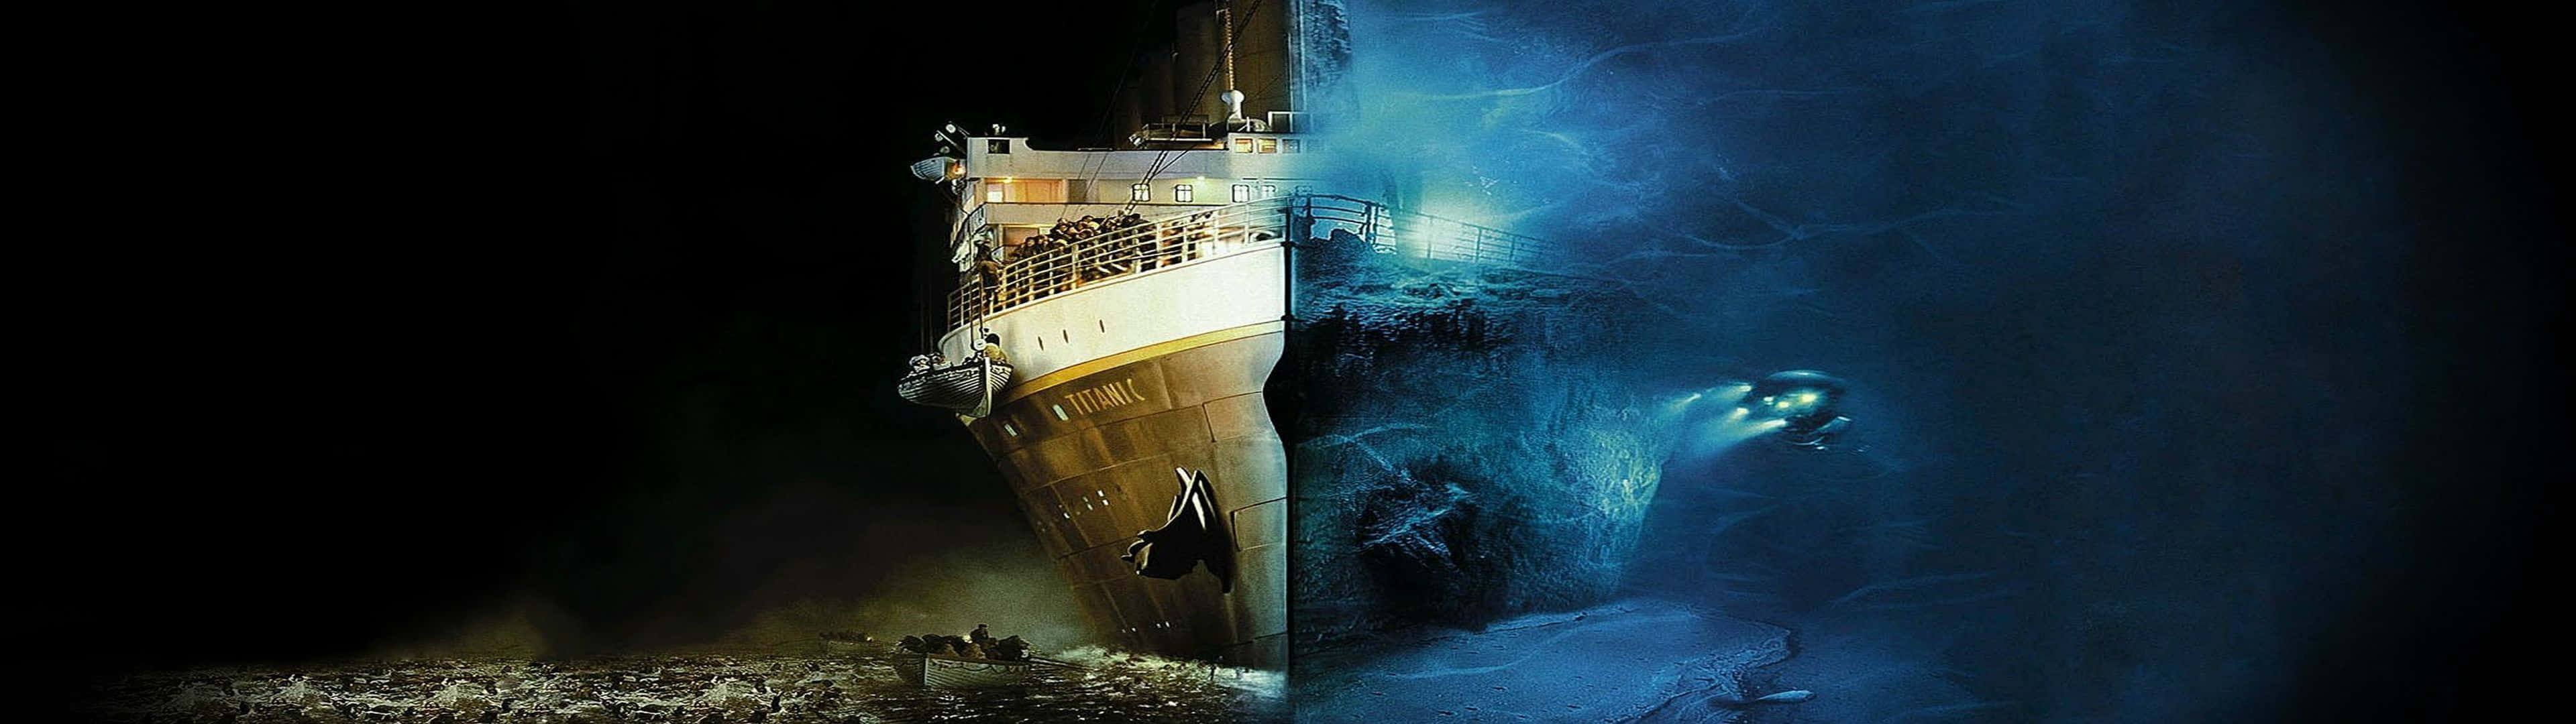 Free Titanic Background, Titanic Background s for FREE